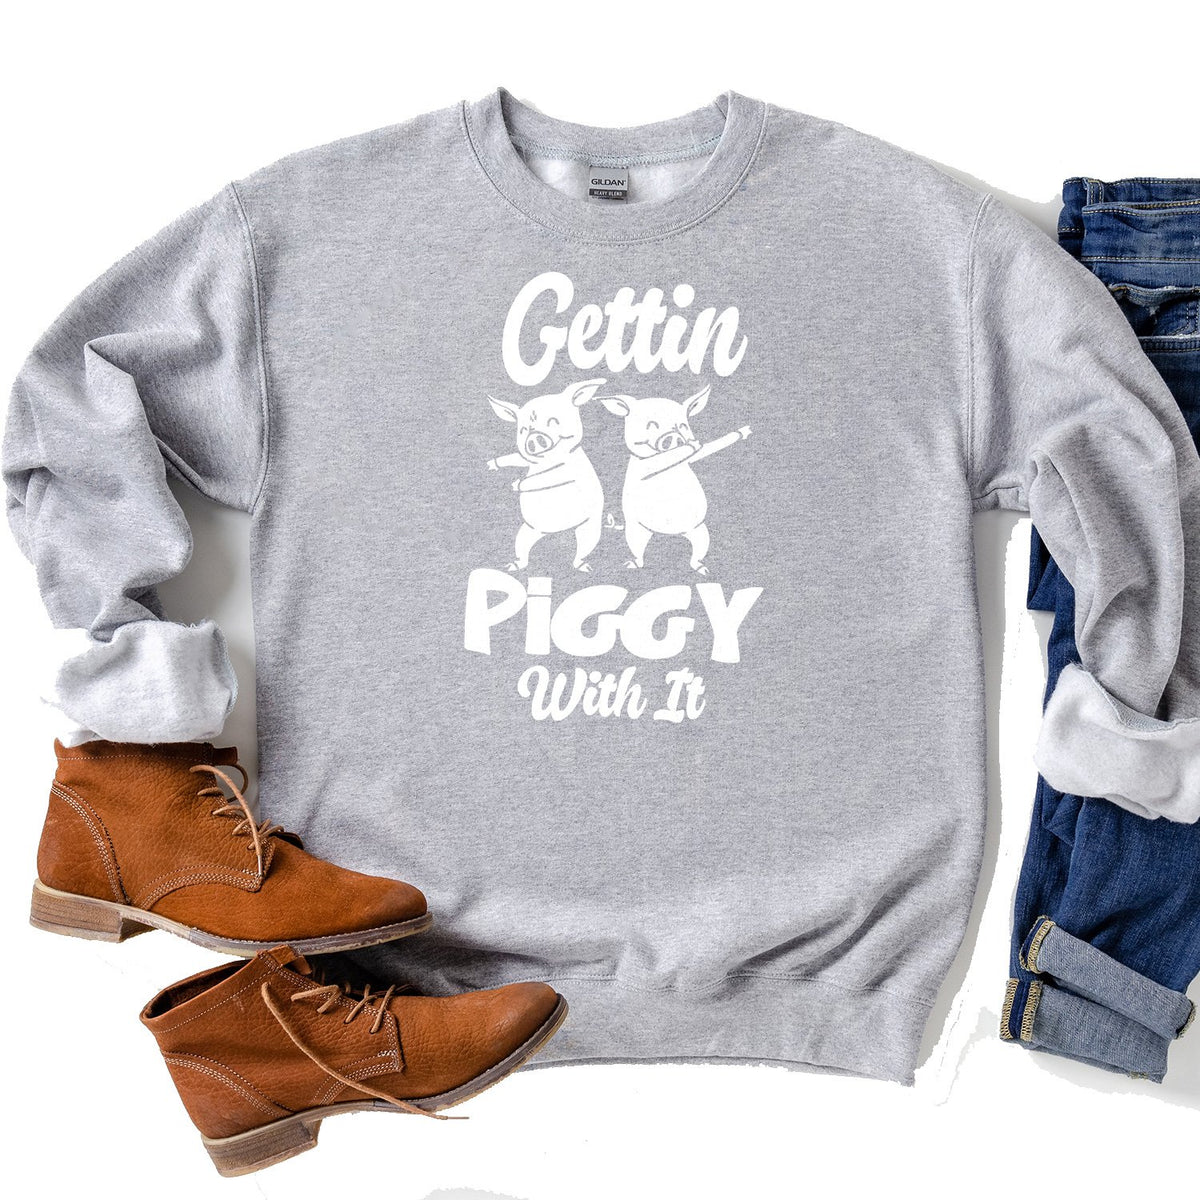 Gettin Piggy With It - Long Sleeve Heavy Crewneck Sweatshirt